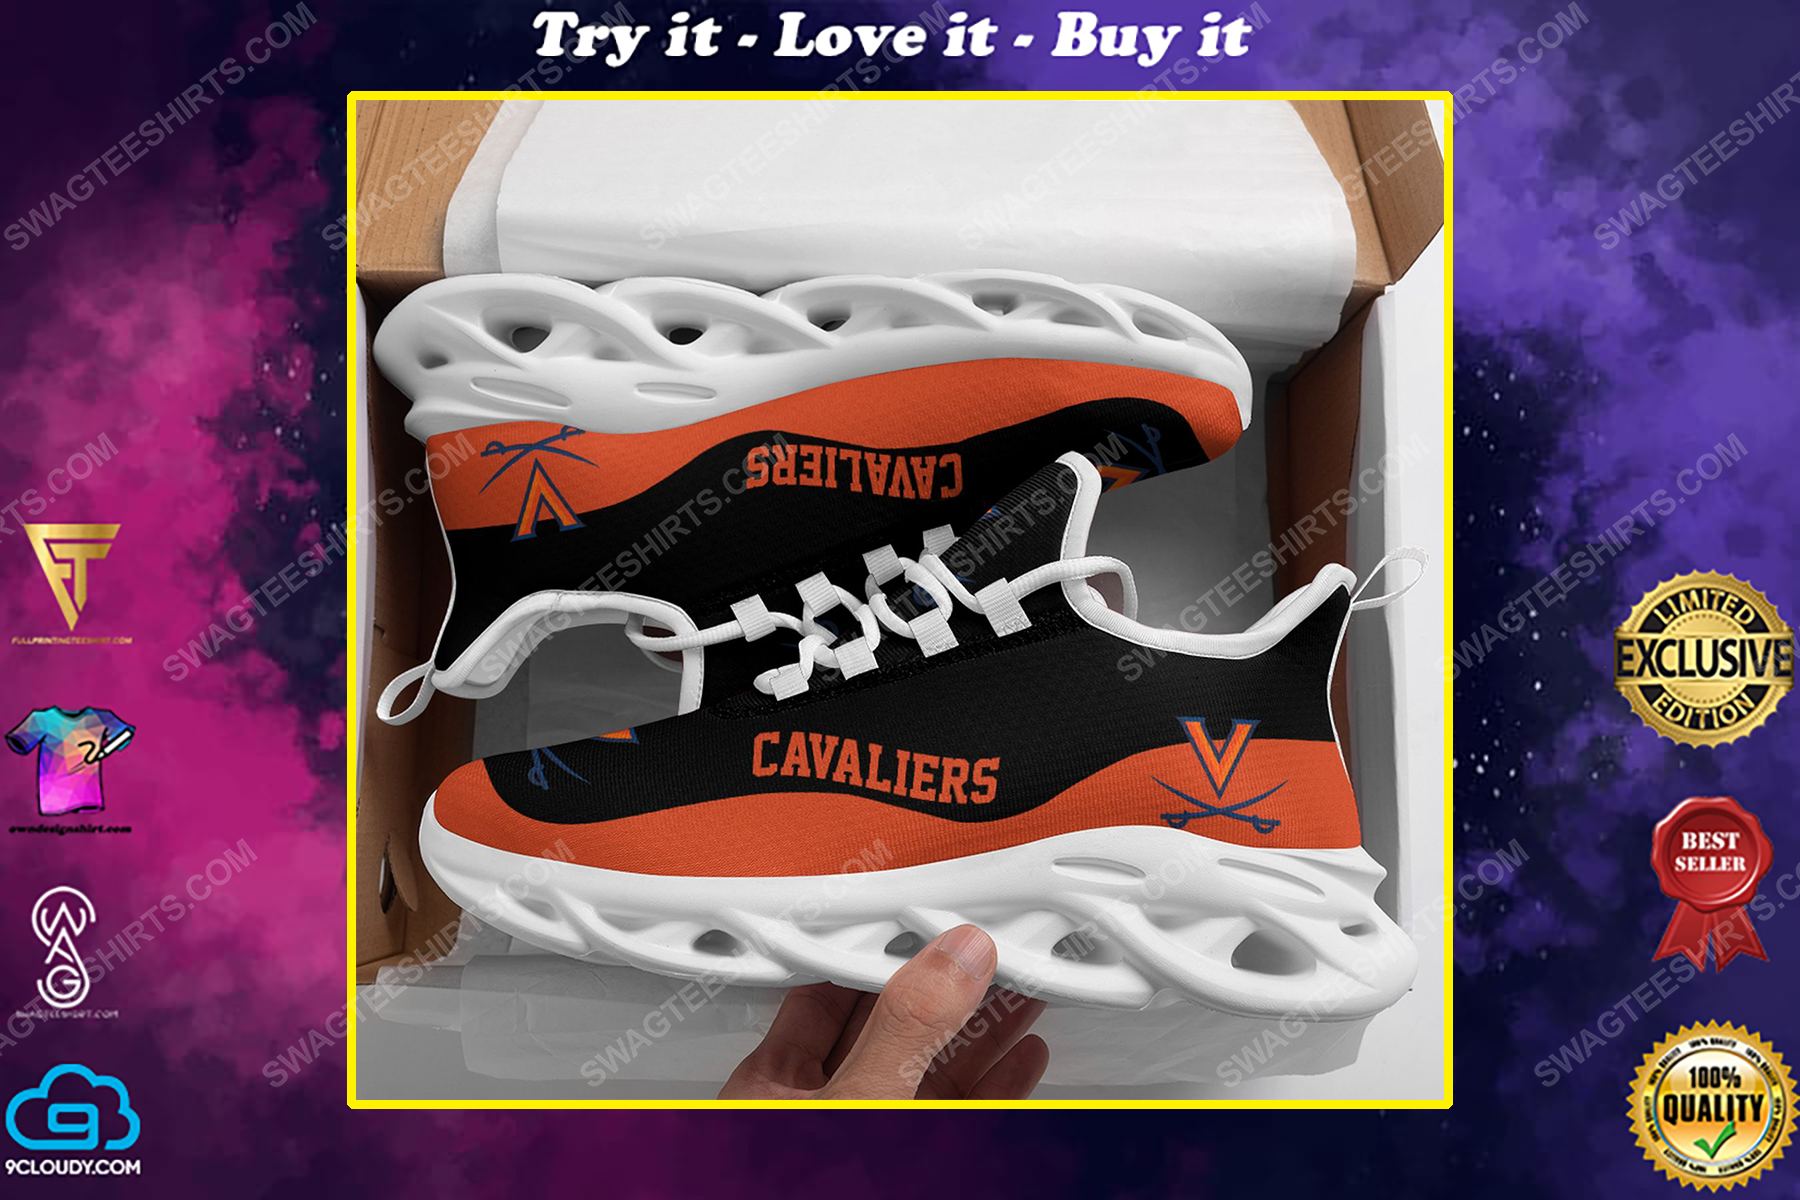 The virginia cavaliers football team max soul shoes